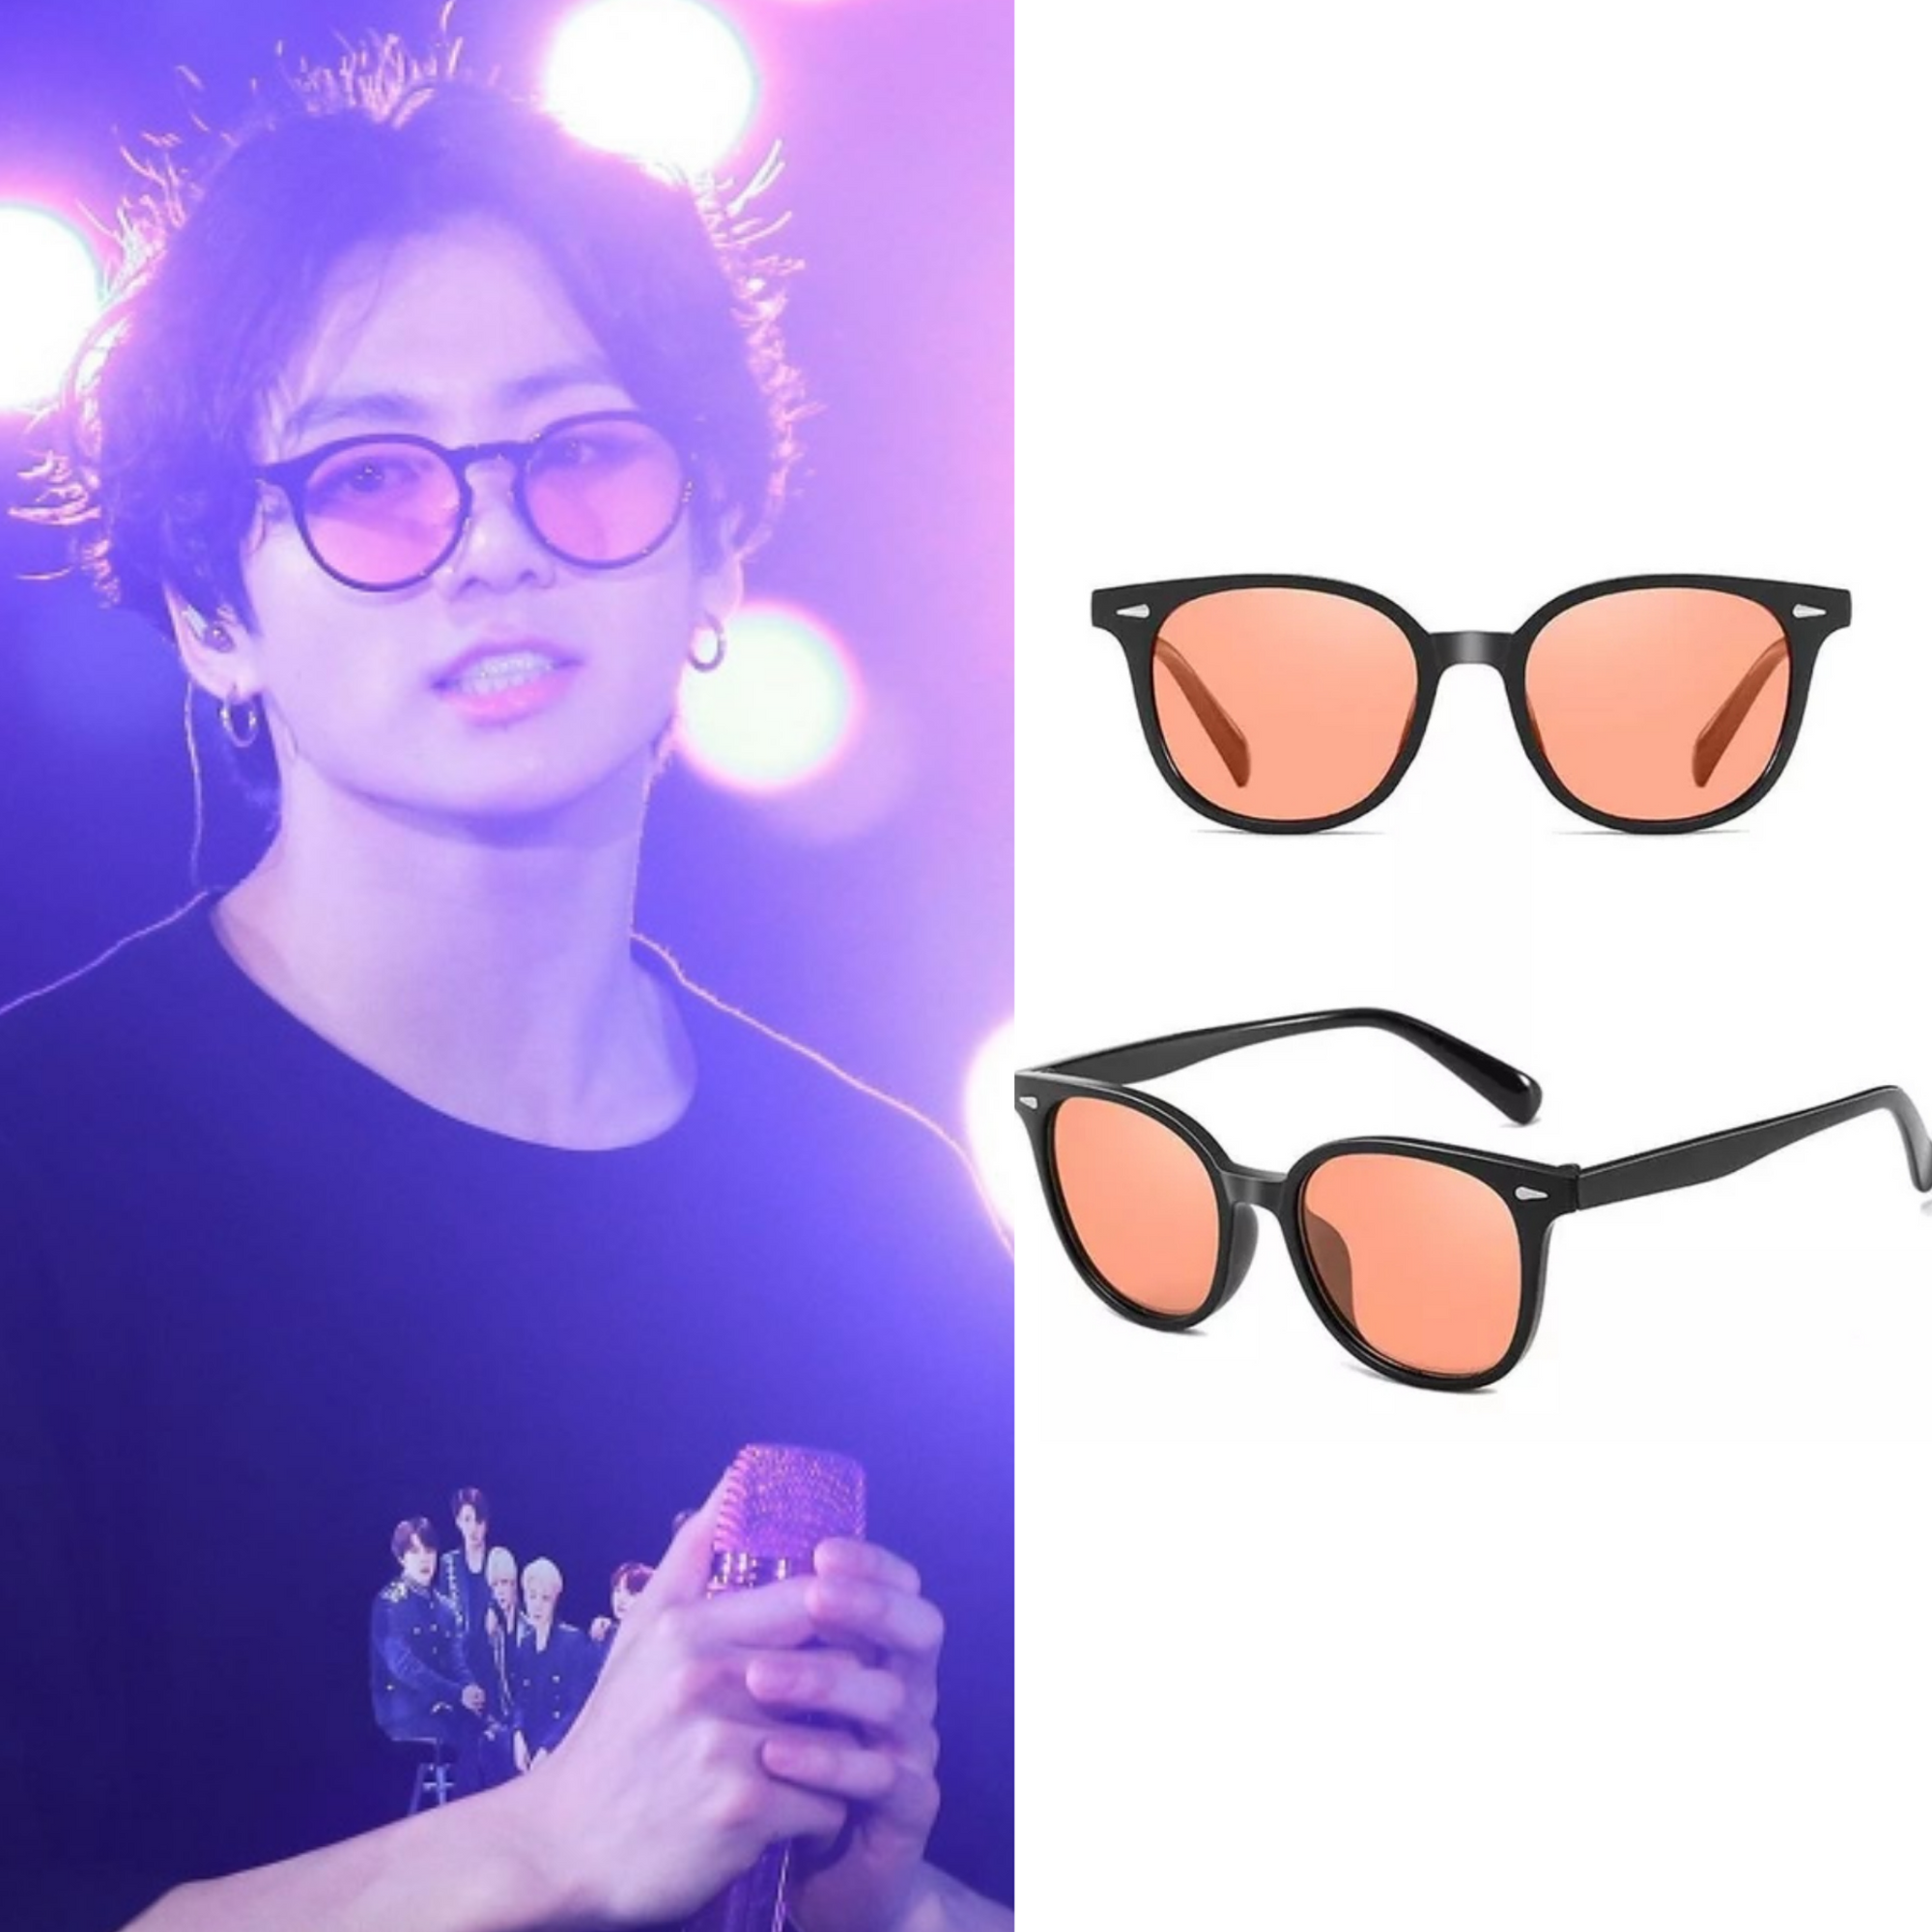 Jungkook-style pink lens sunglasses